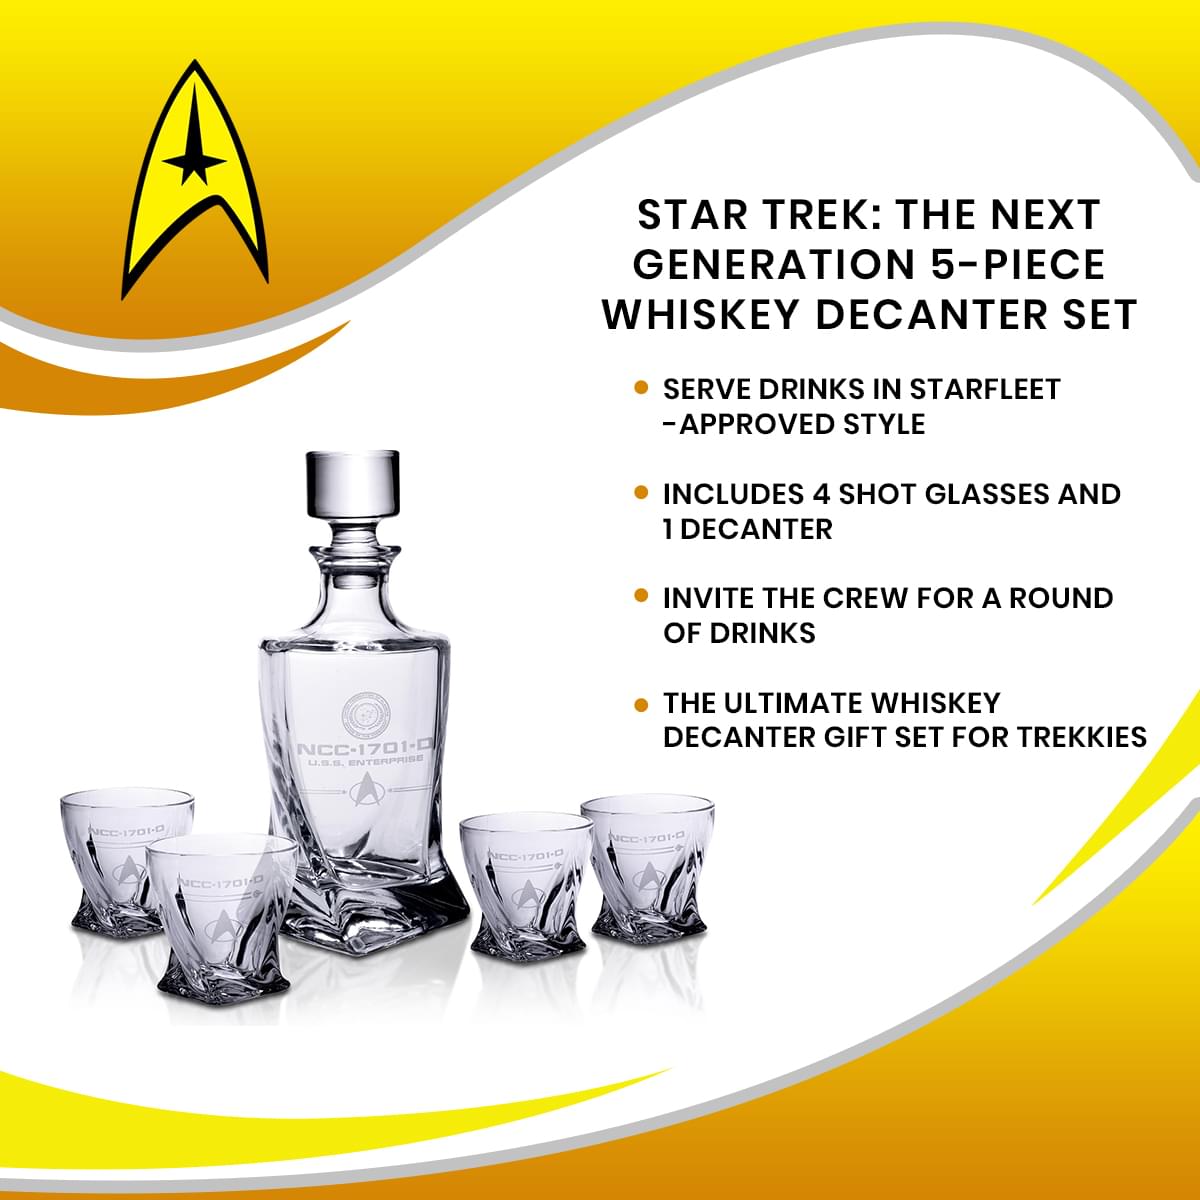 Star Trek: The Next Generation 5-Piece Whiskey Decanter Set